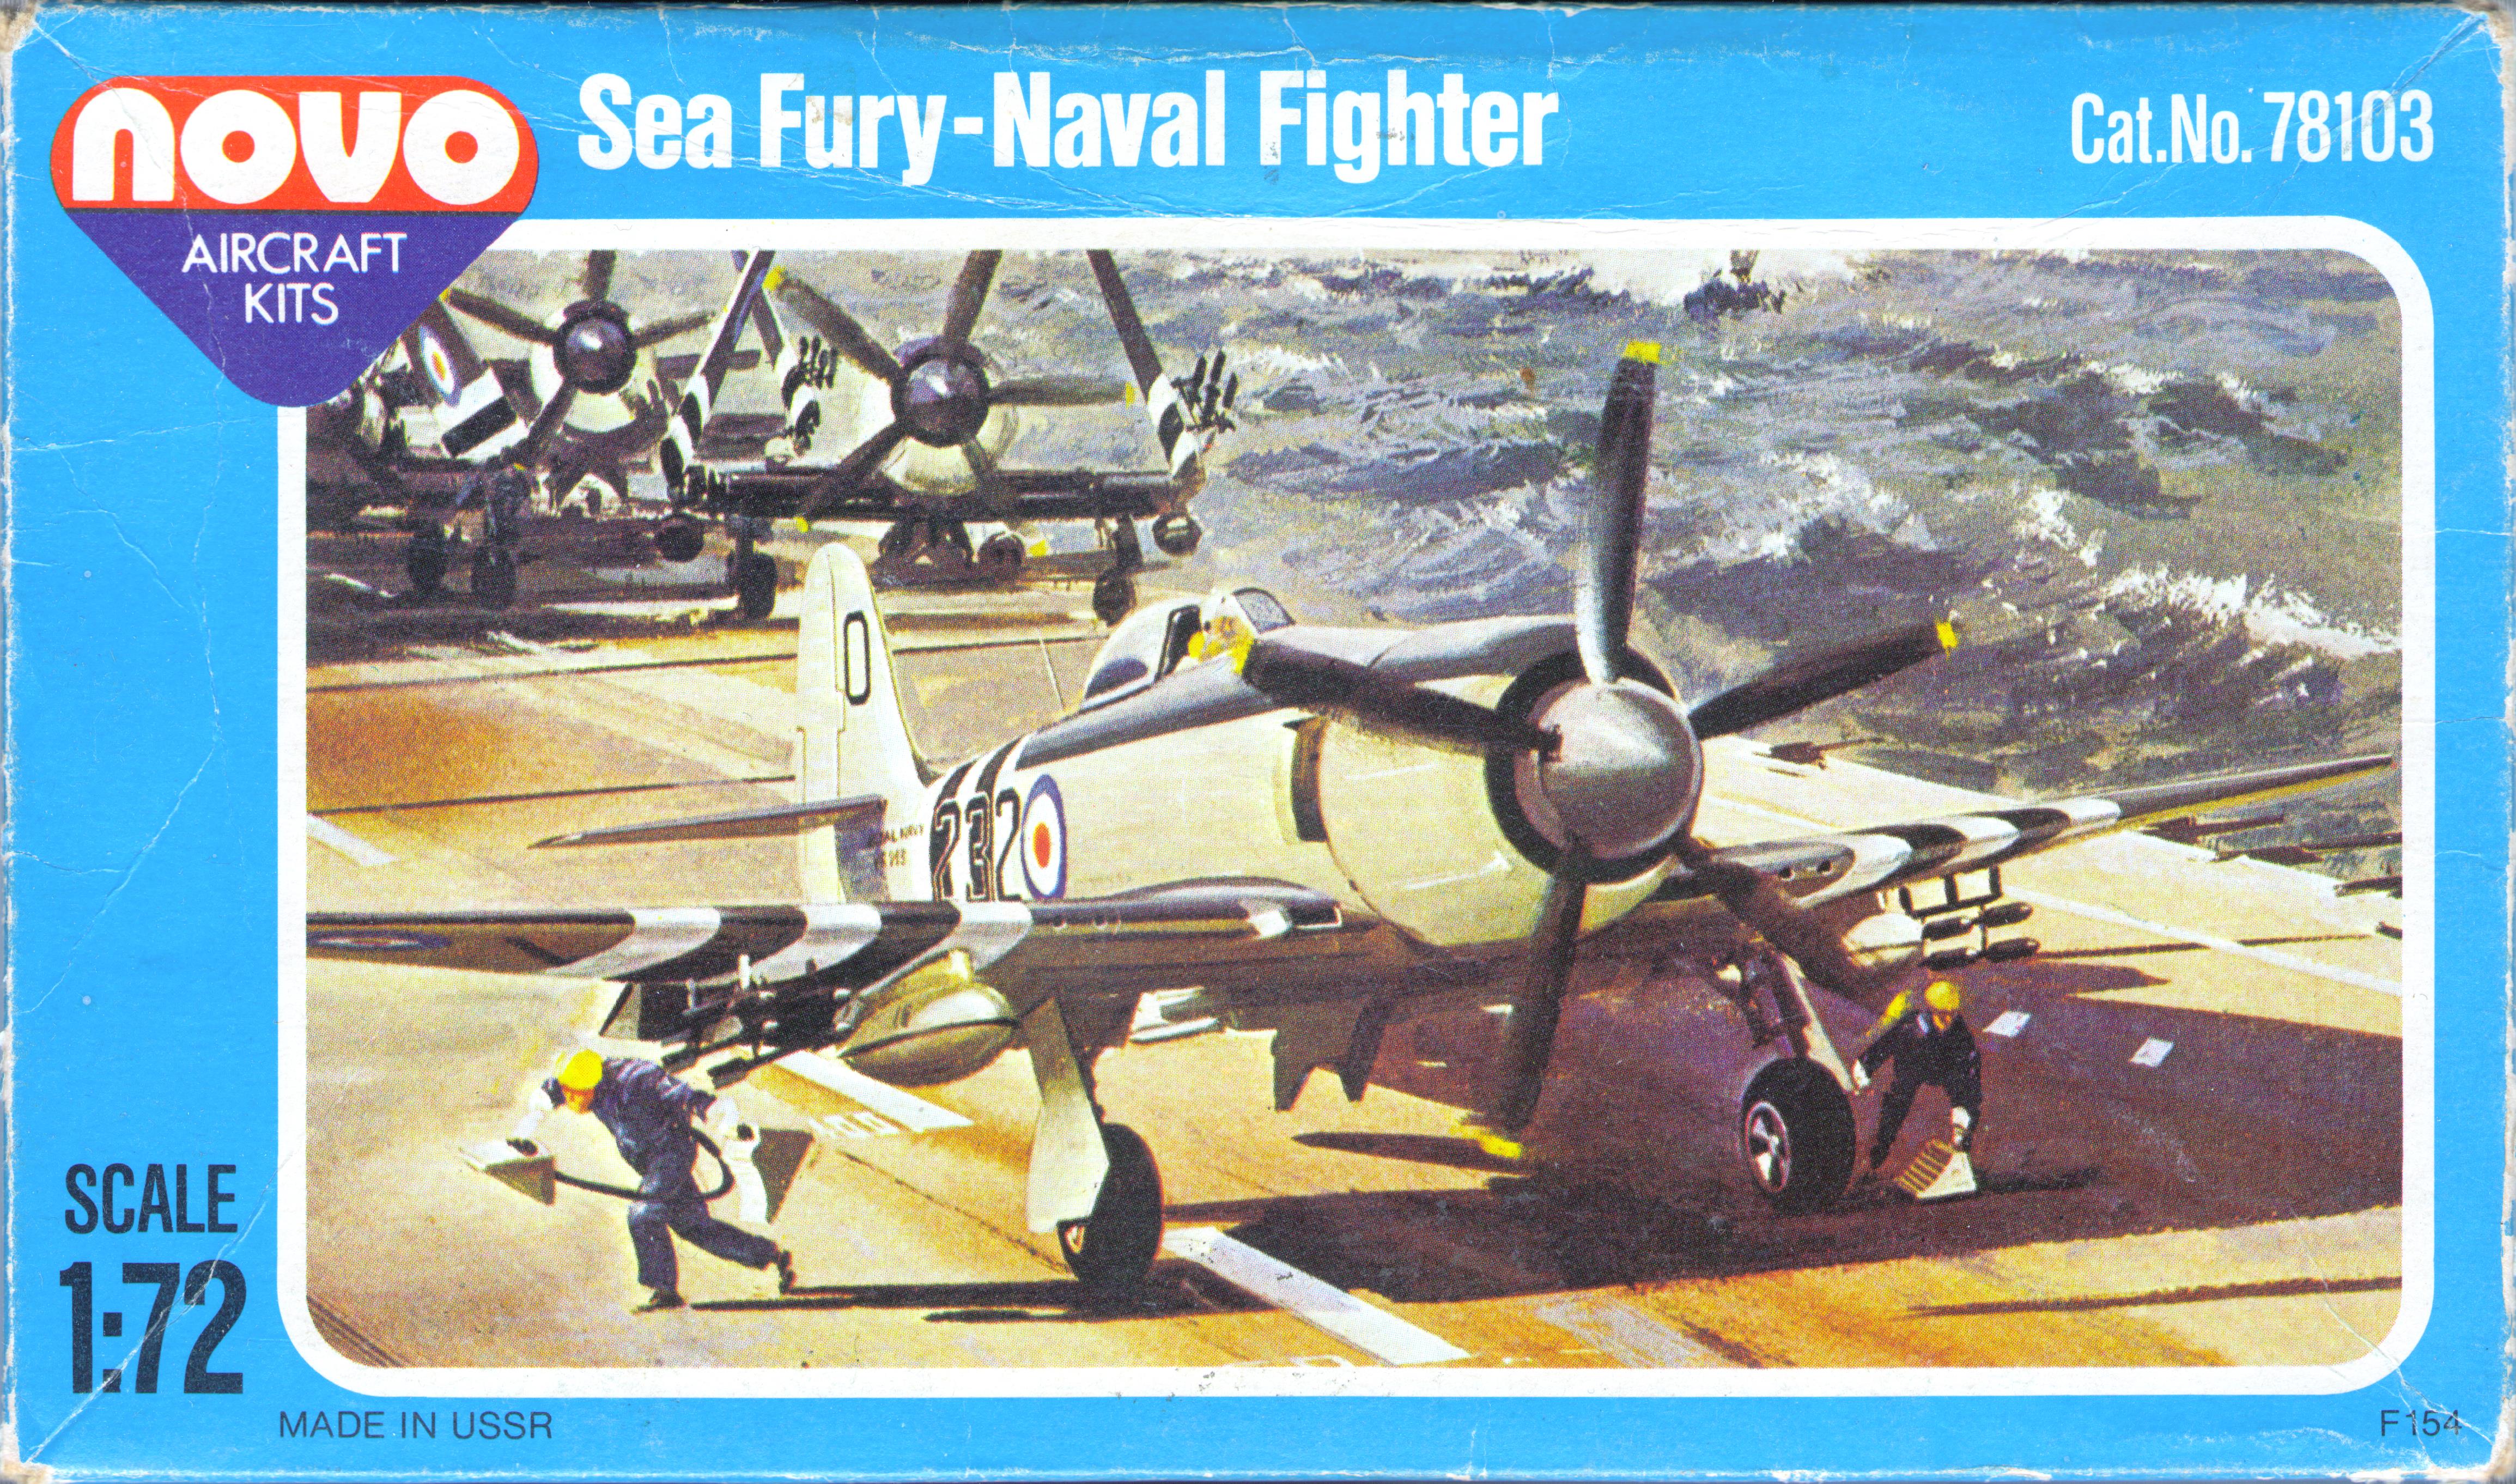  Верх коробки (тестовый выпуск) NOVO Toys Ltd F197 Curtiss P-40 Tomahawk